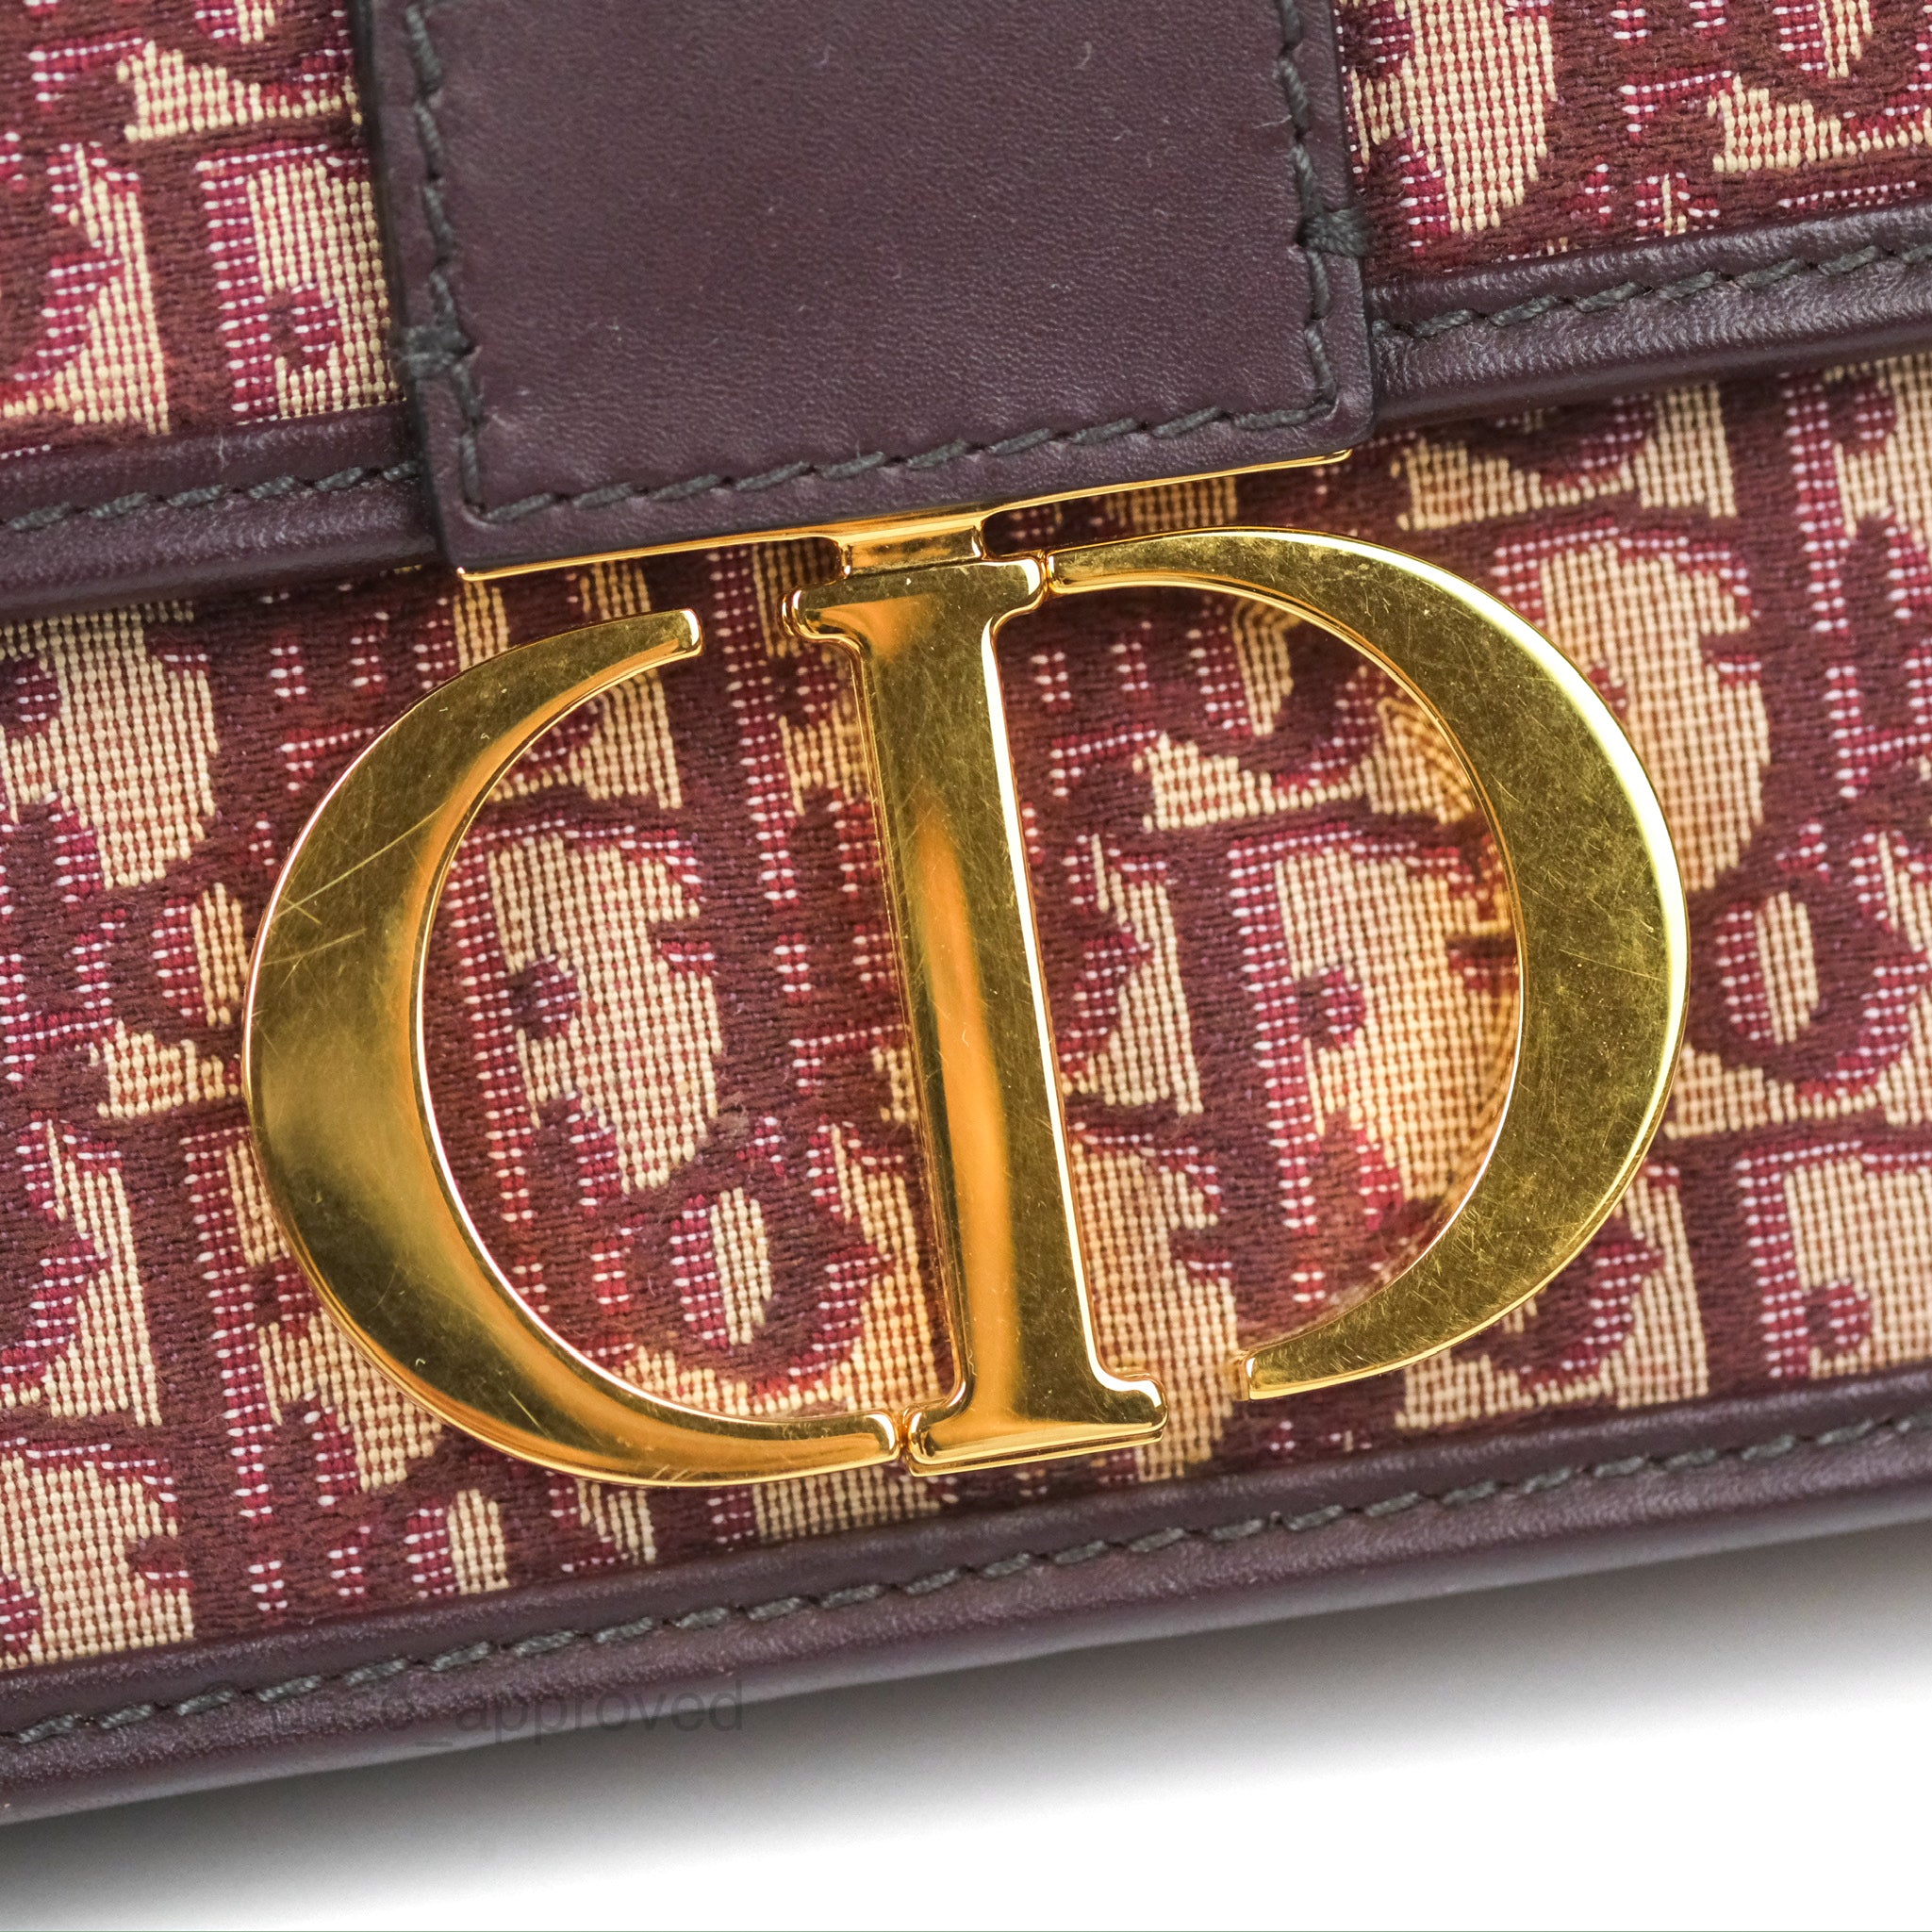 30 montaigne cloth handbag Dior Burgundy in Cloth - 31576252